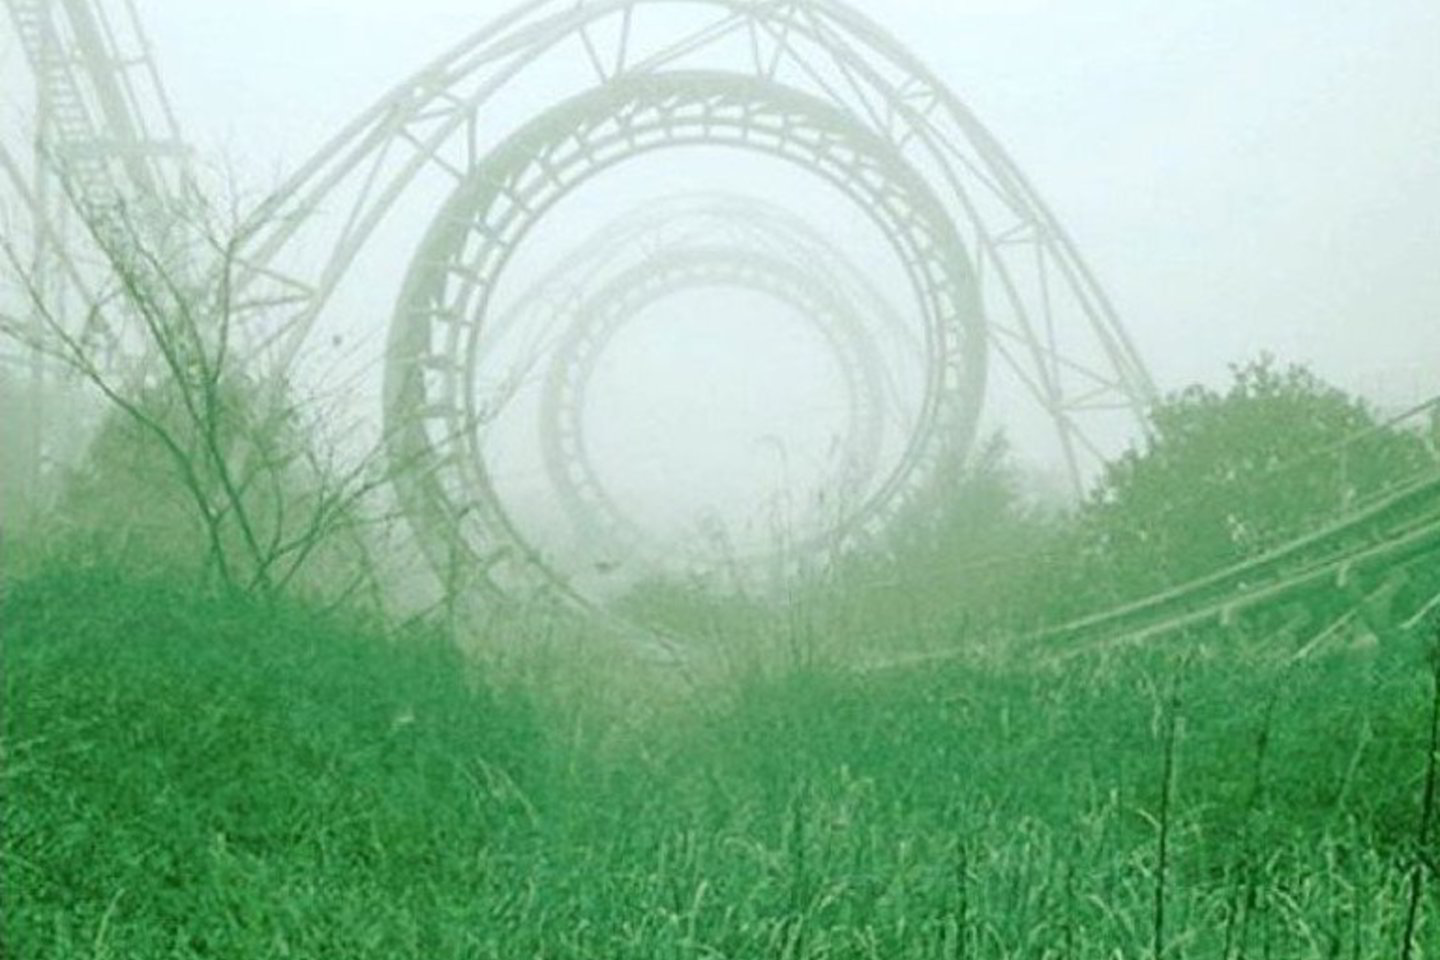  Pramogų parkas „Nara Dreamland“ Naroje.<br> Instagram nuotr.